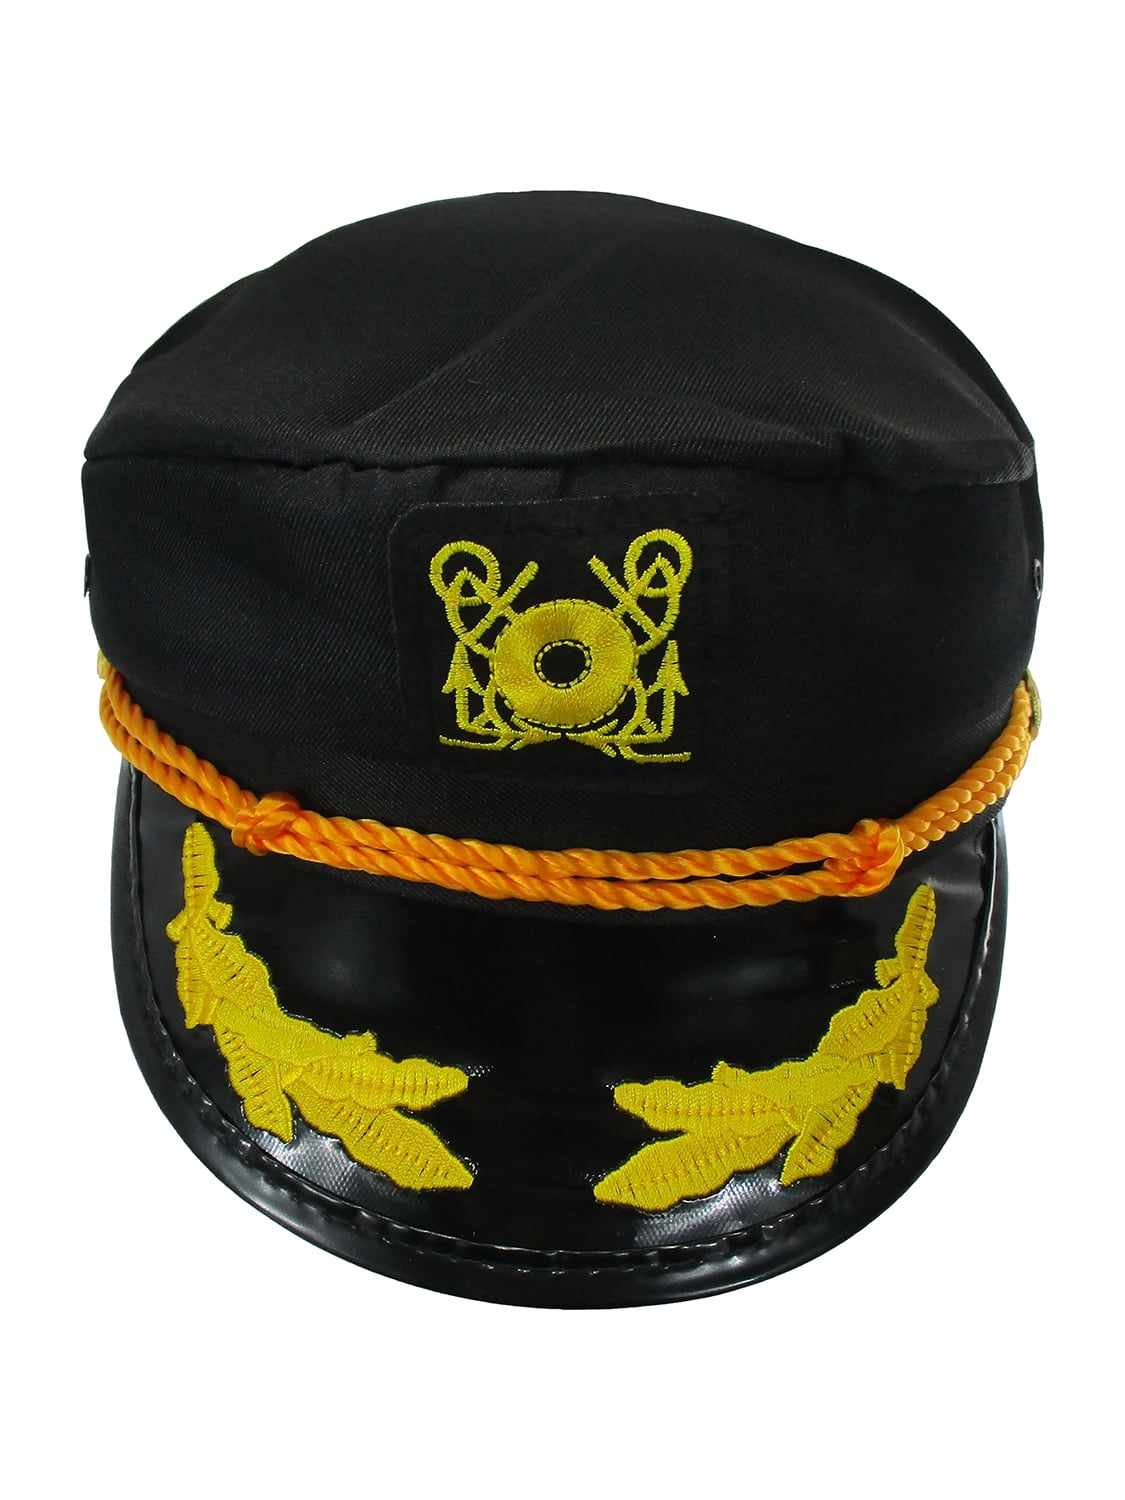 Captain Fancy Costume Hat Cap Adjustable Navy Marine Yacht Boat Ship SailoNWUS 